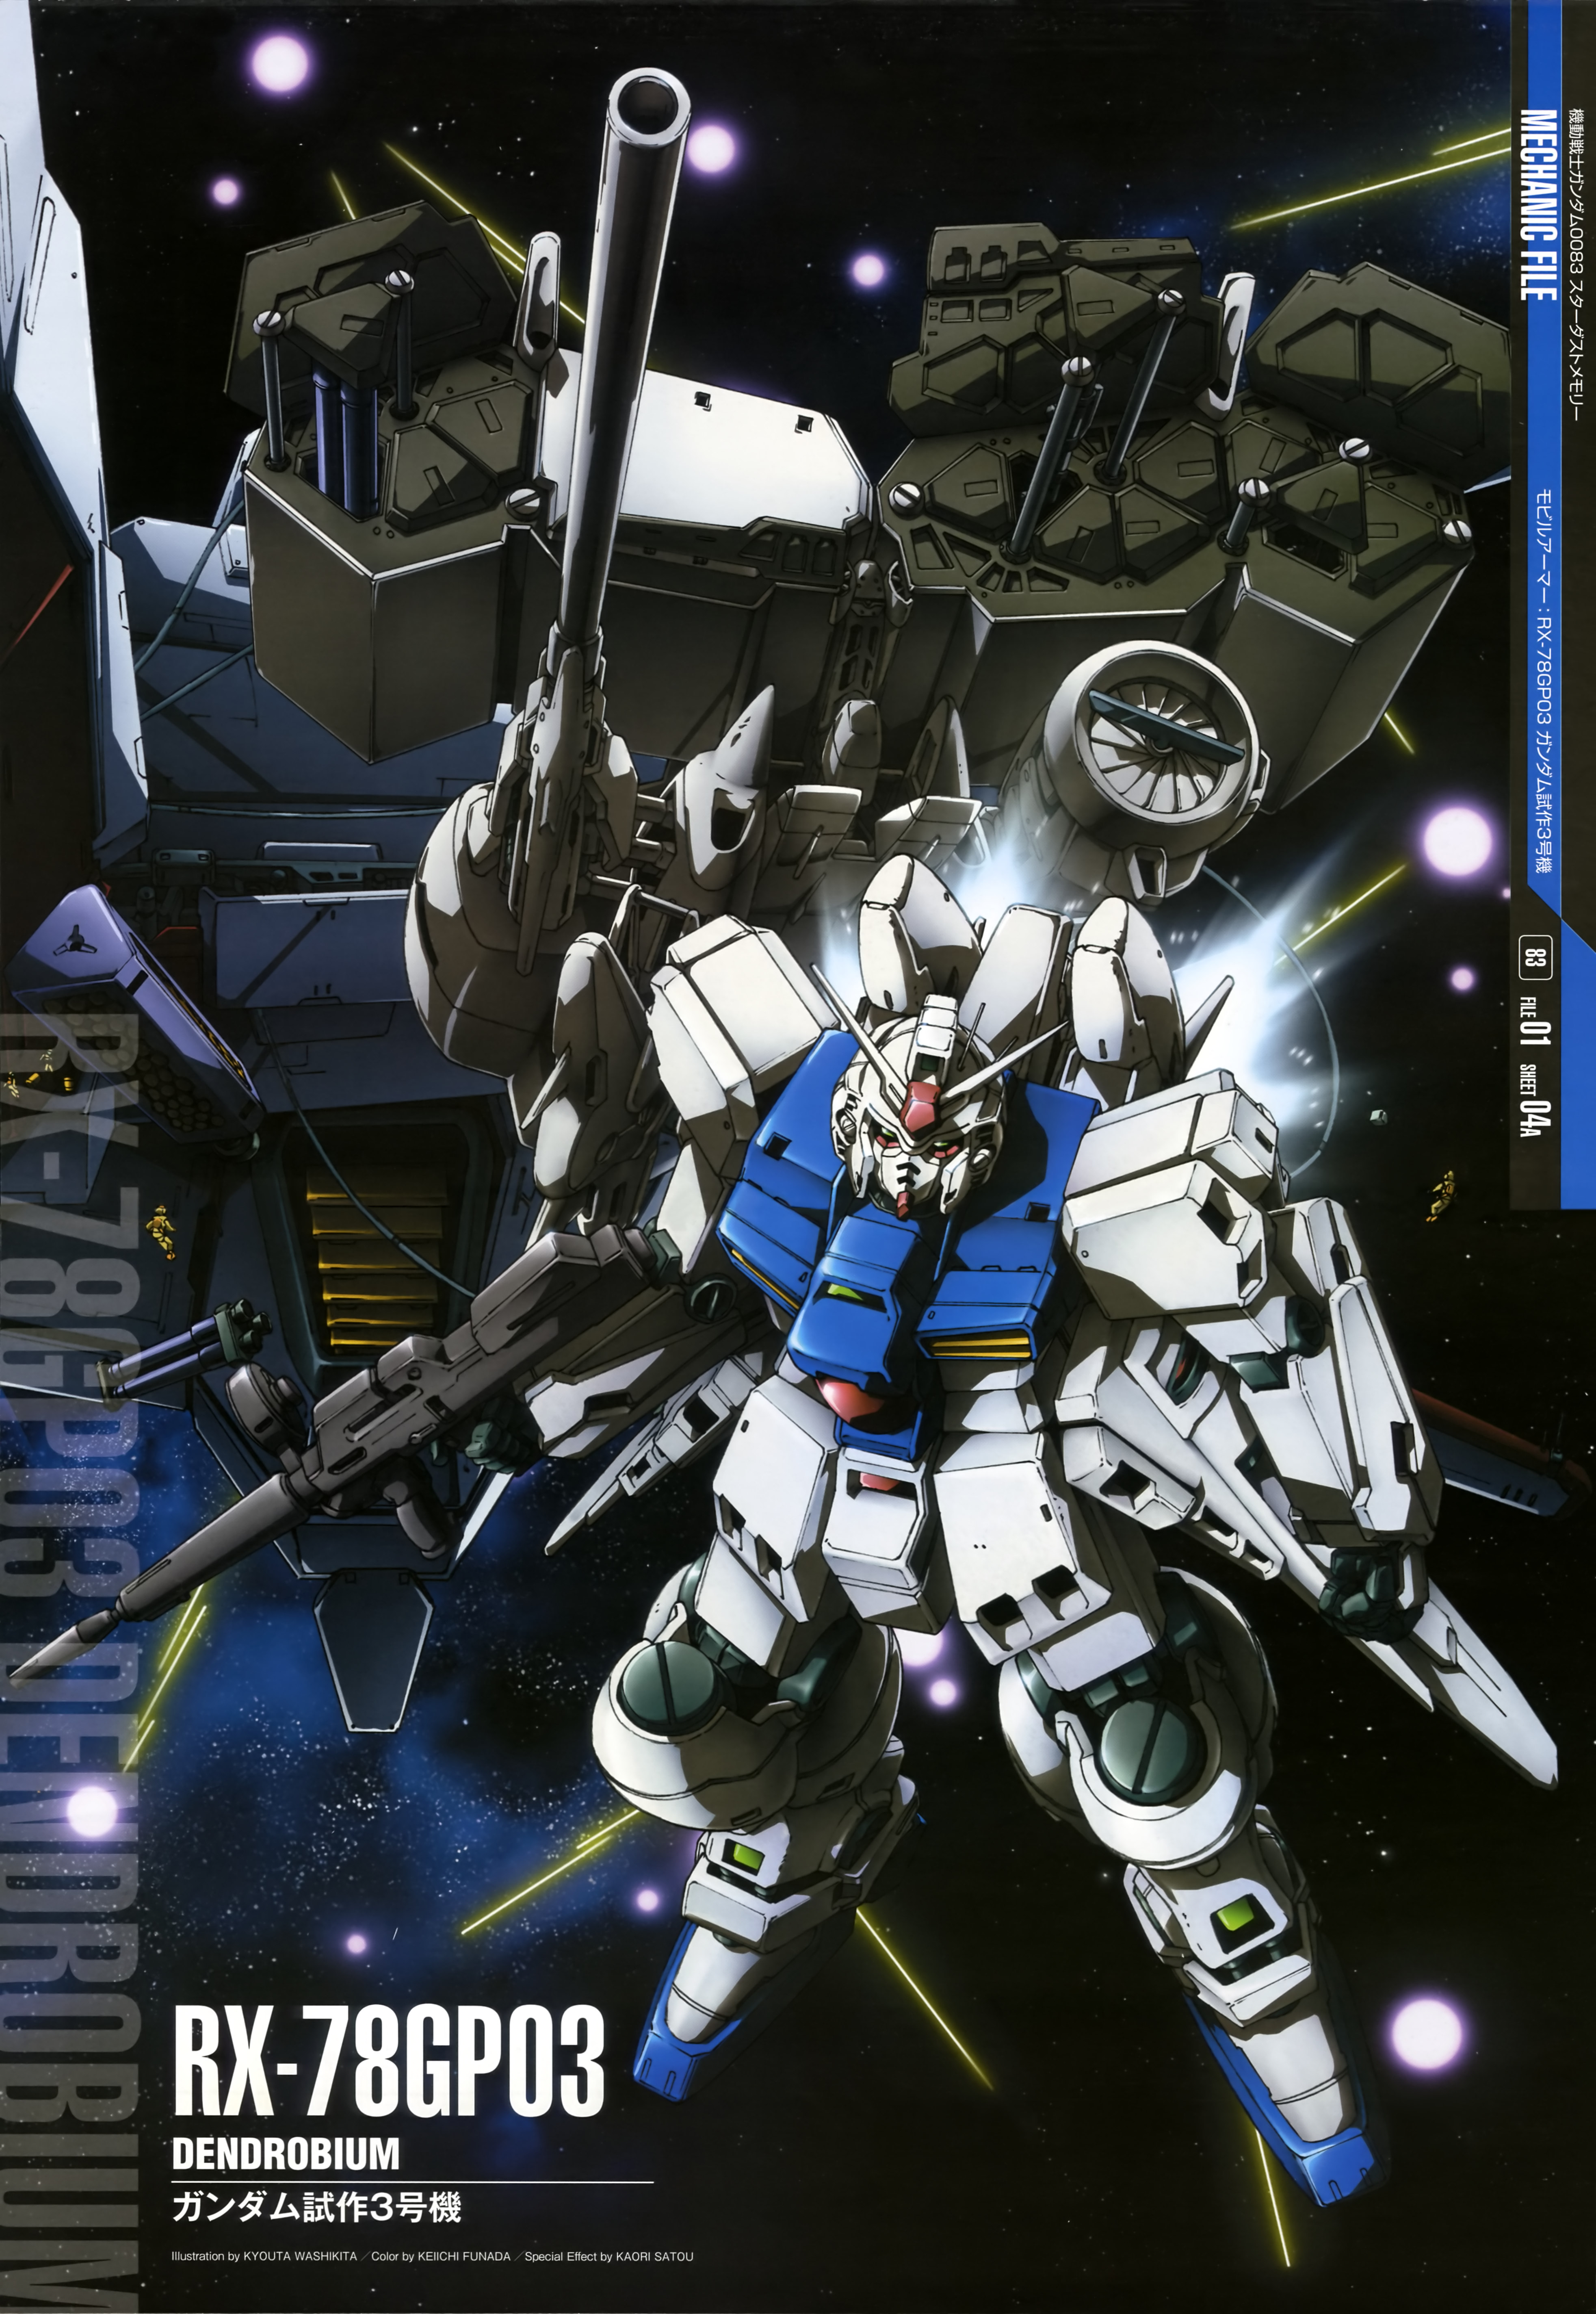 GP03 Gundam Dendrobium Mobile Suit Gundam 0083 Stardust Memory Gundam Anime Mechs Super Robot Taisen 3929x5695